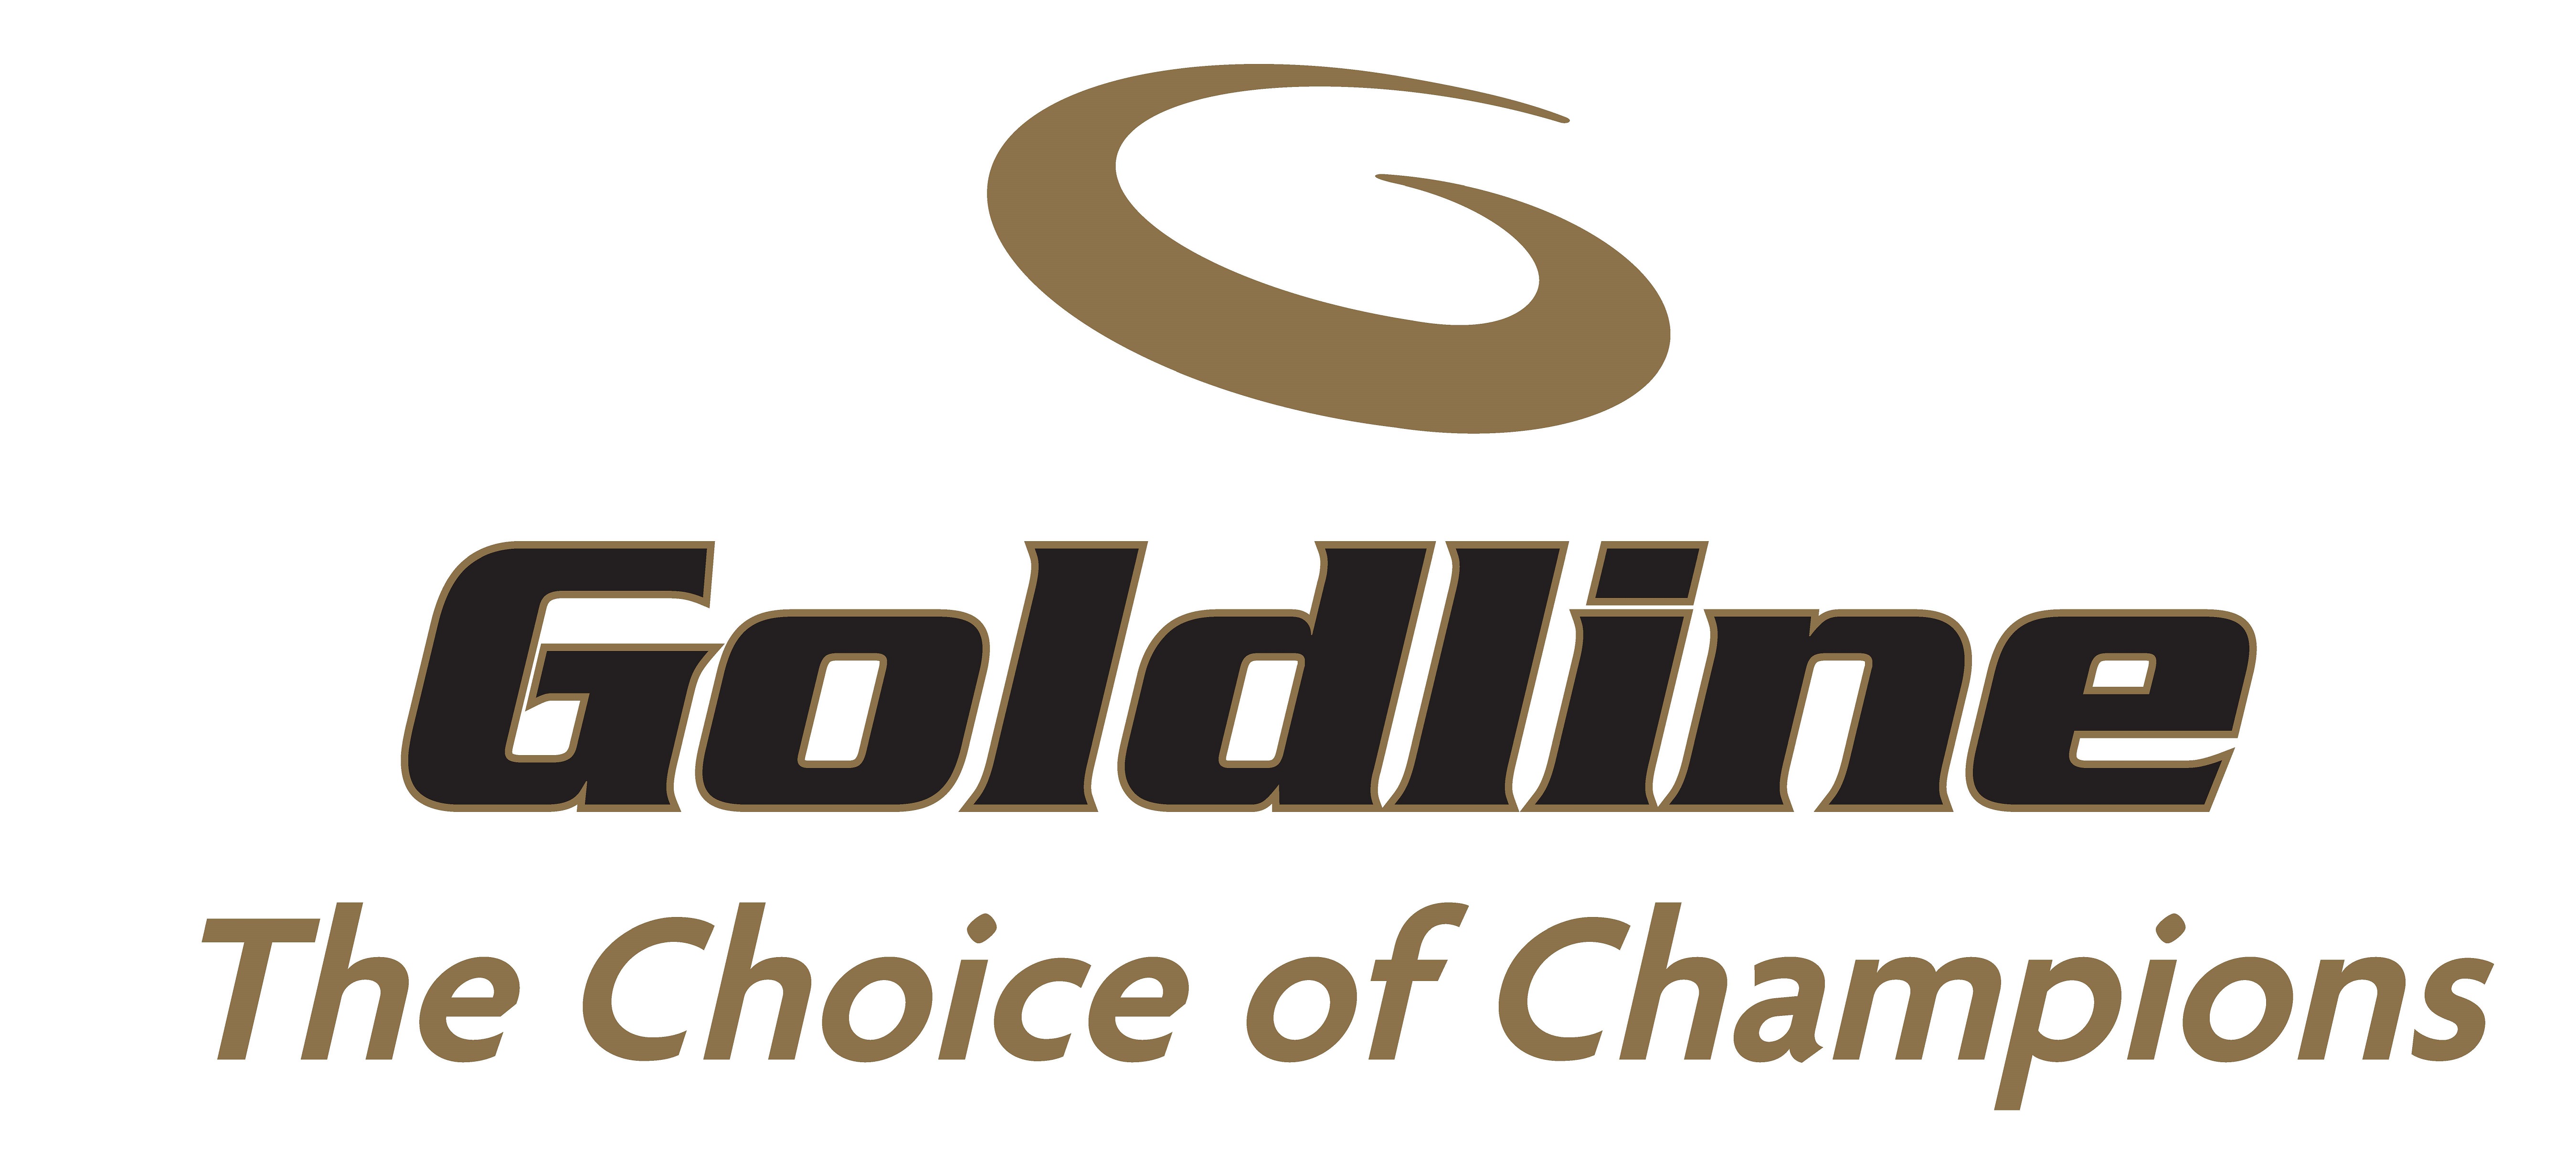 Goldline ice logo 48 in w